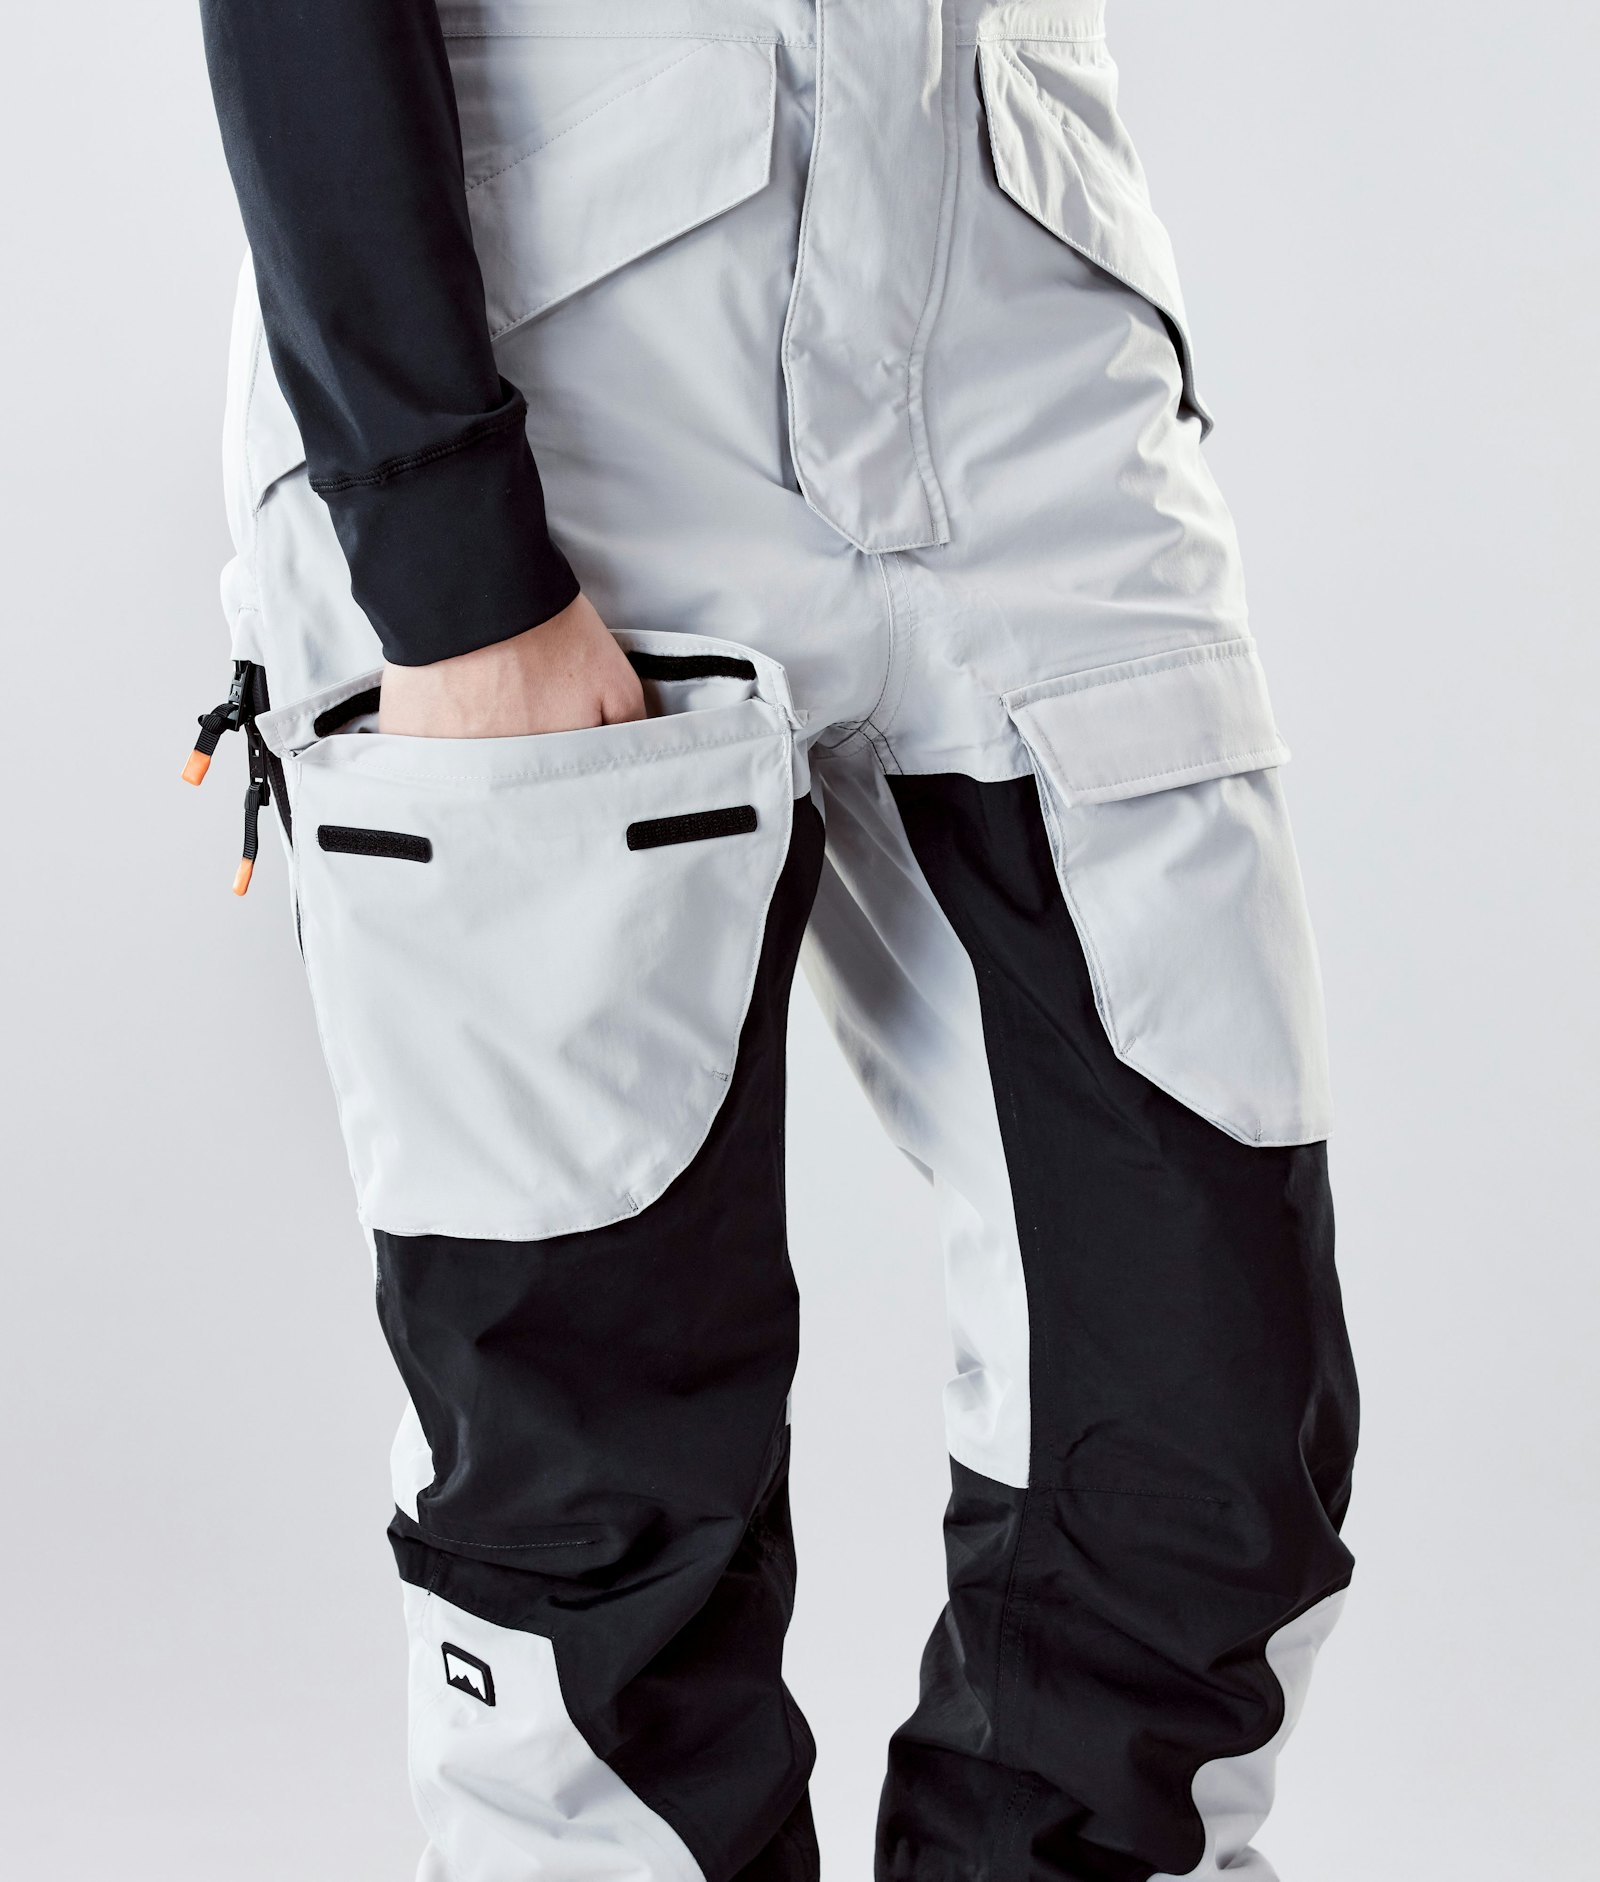 Montec Fawk W 2020 Pantalon de Ski Femme Light Grey/Black